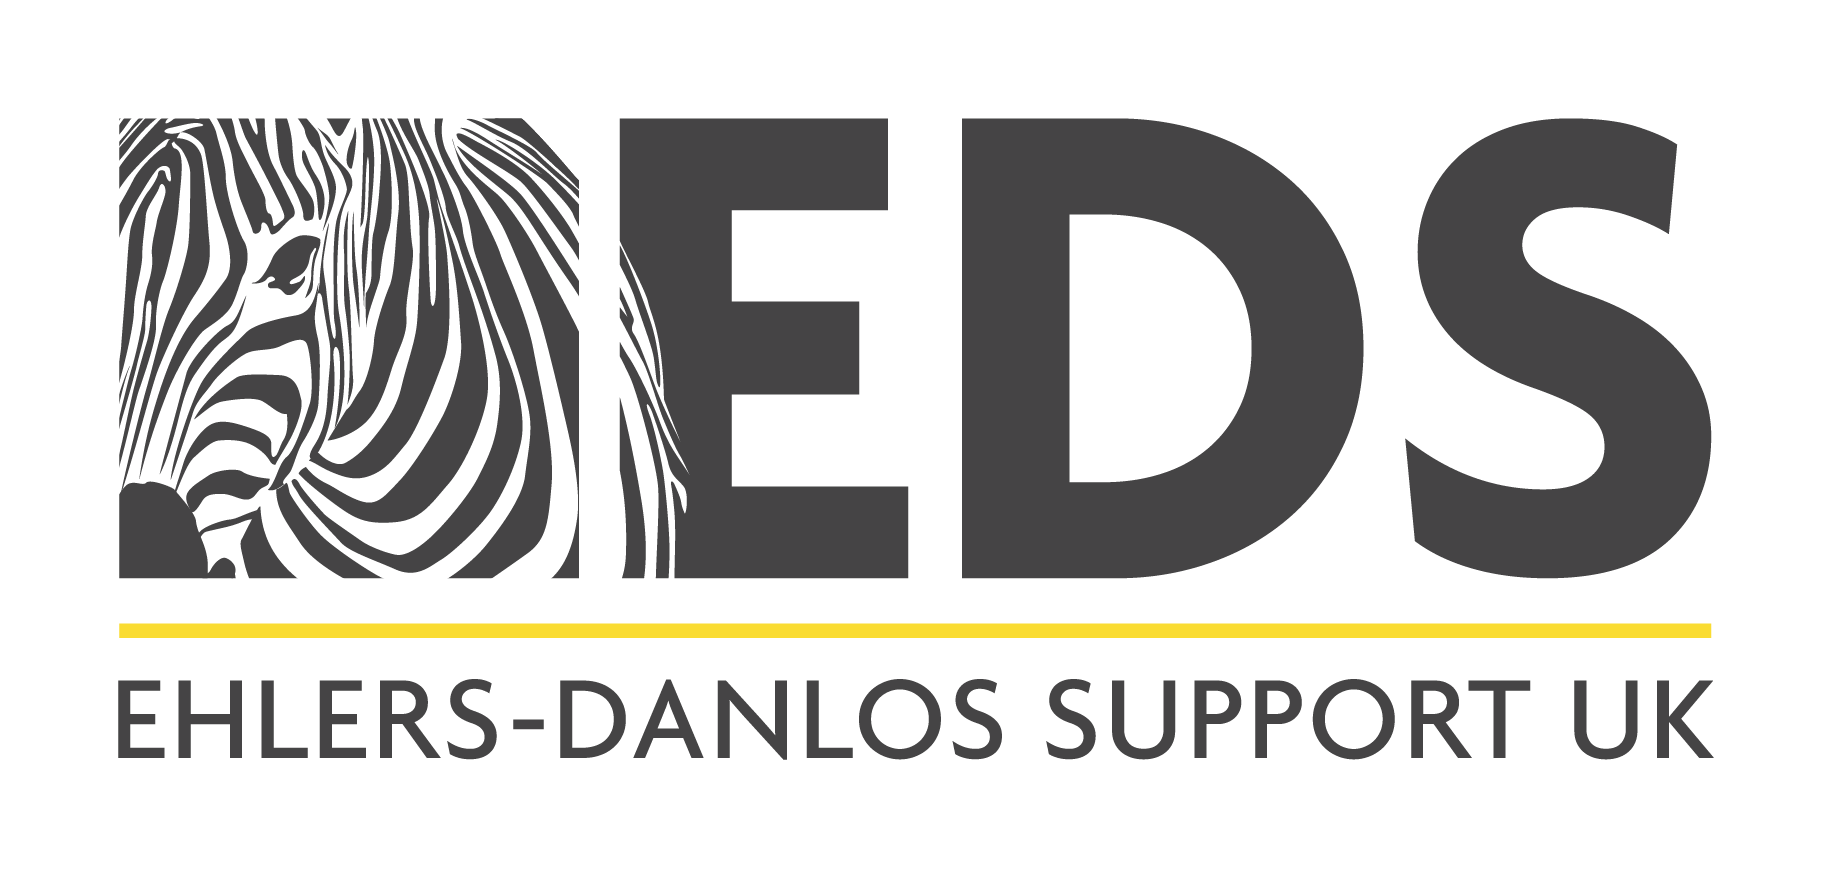 www.ehlers-danlos.org